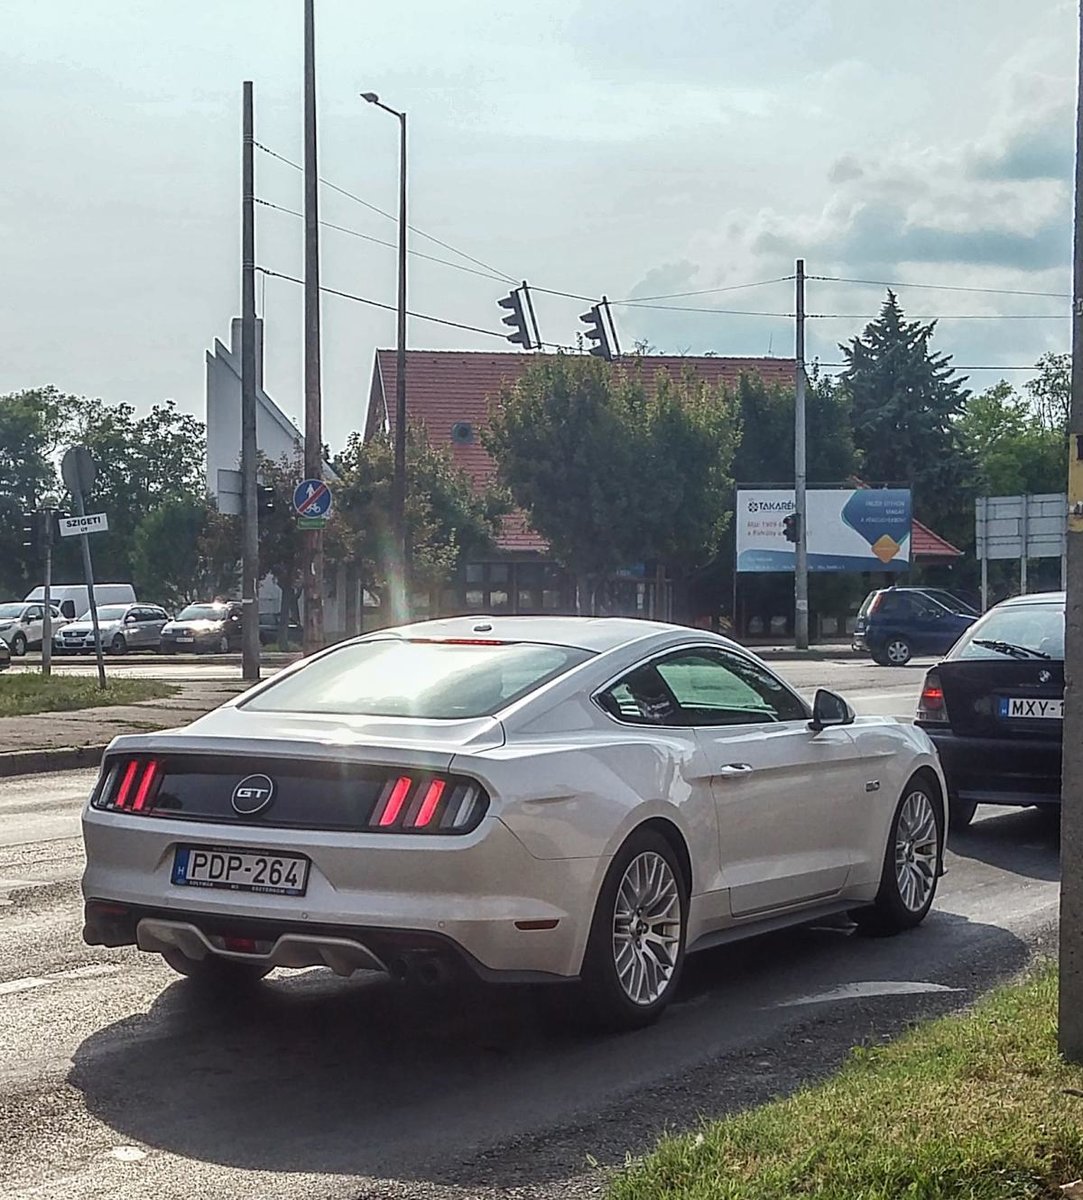 Moderner Ford Mustang, gesehen in Pécs (HU), August 2019.